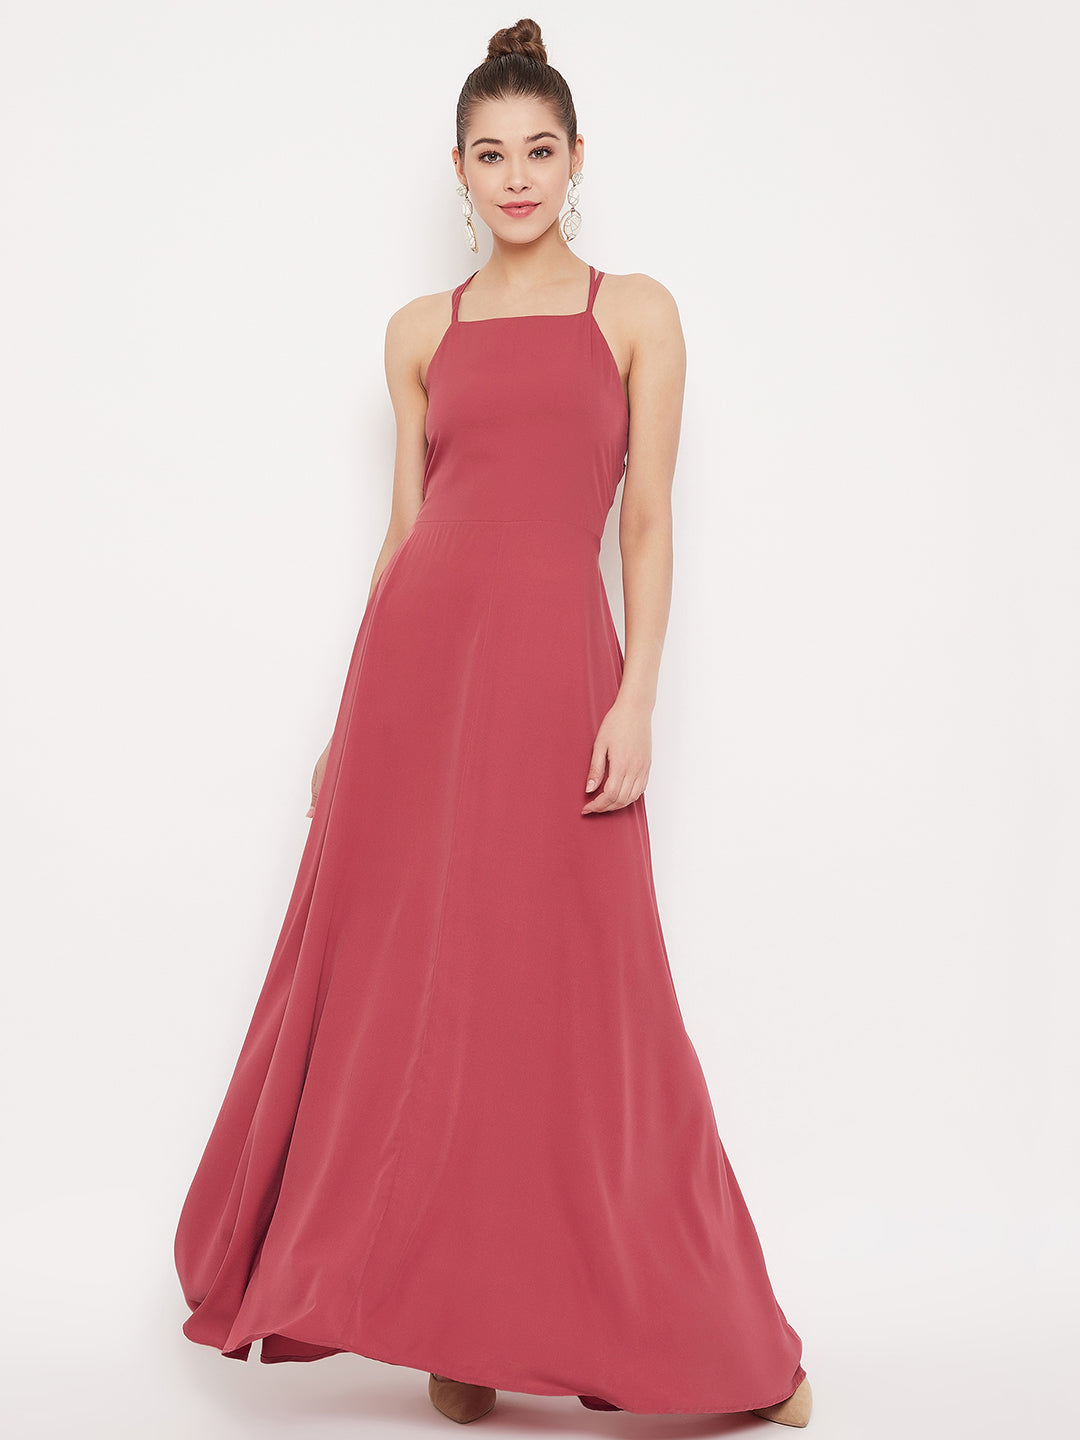 DEAL - Women's Pink/Black Halter Dress - Small - Chest 30 - Length 40